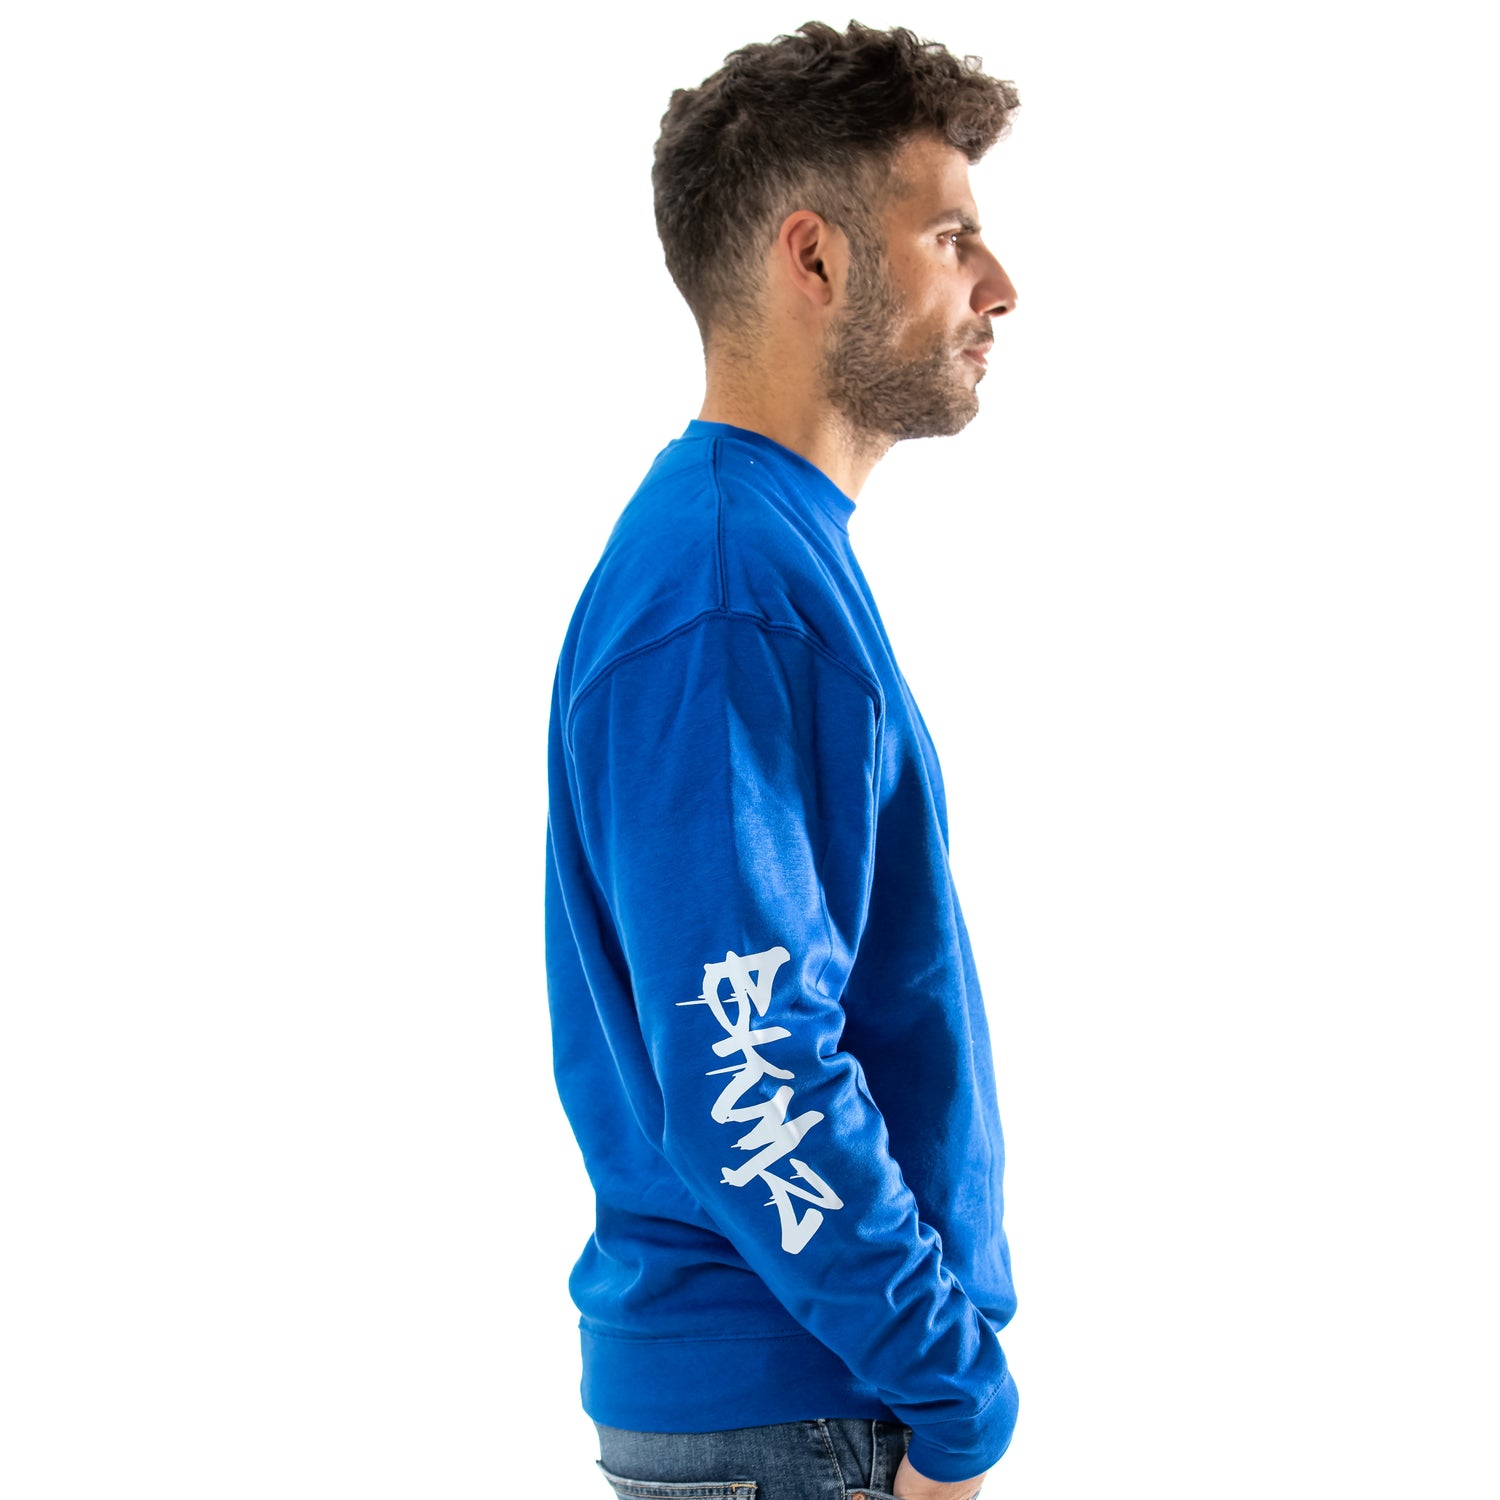 BKMZ Original Side Design Sweatshirt